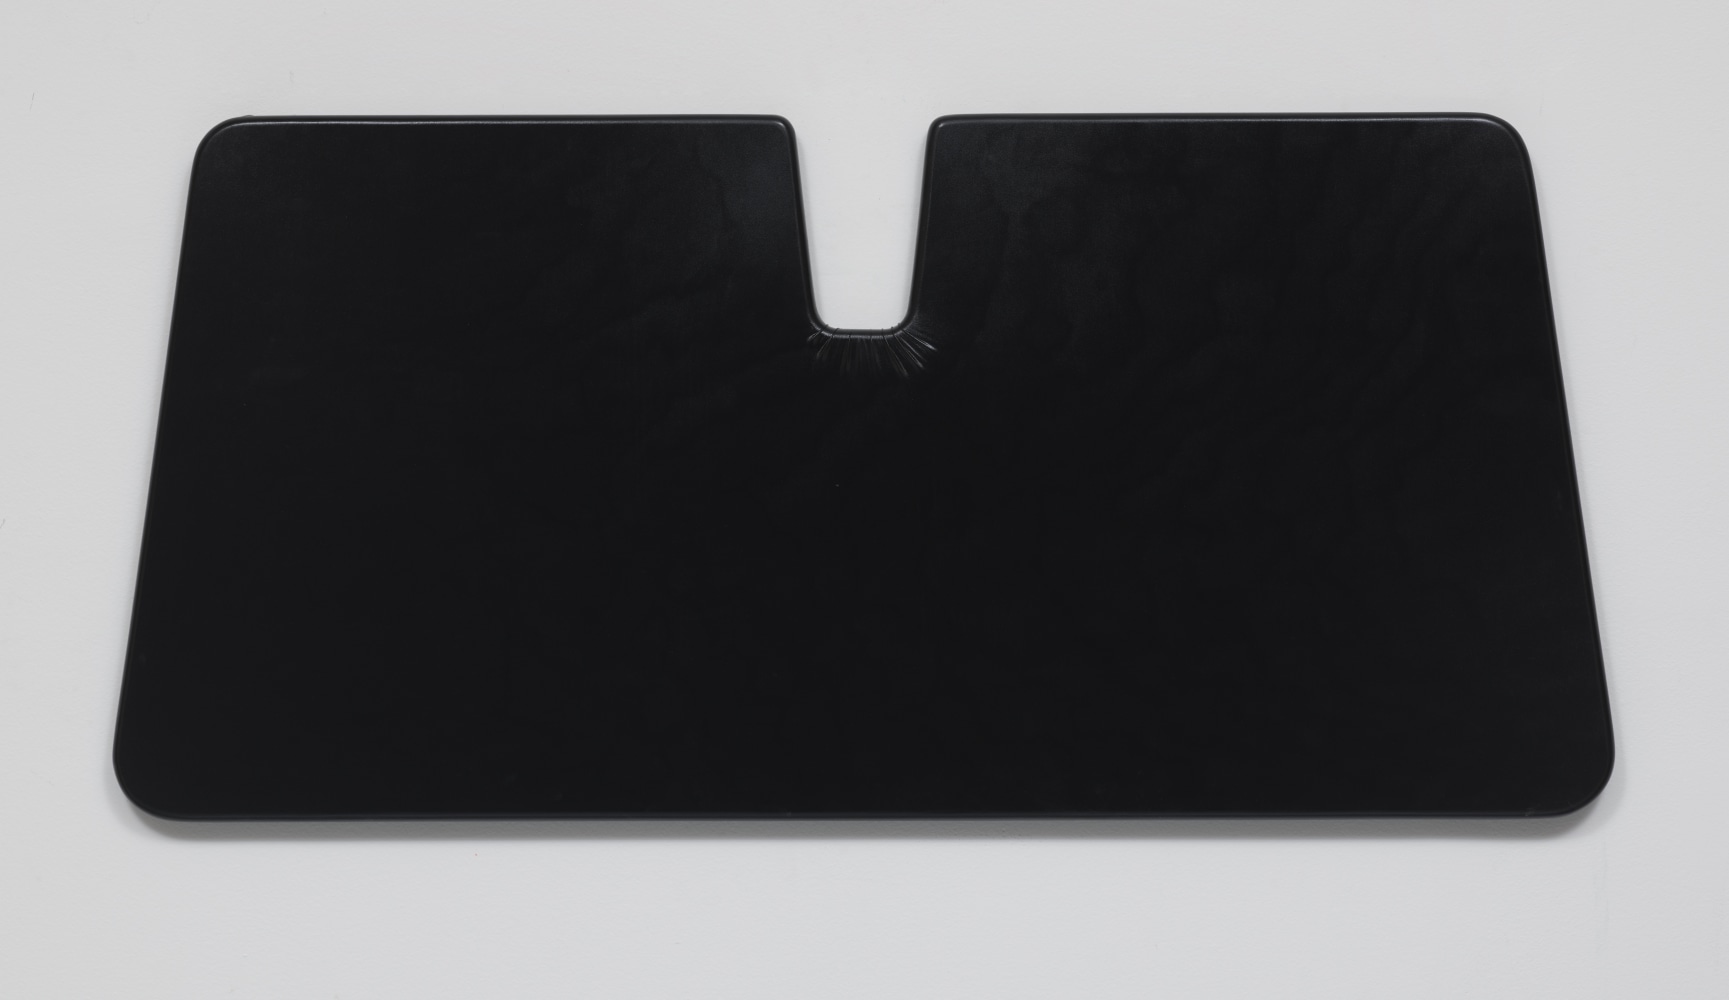 Dominic Samsworth
Sun visor, 2020
Black lycra on wooden shaped panel
26.77h x 58.66w x 1.18d in
68h x 149w x 3d cm